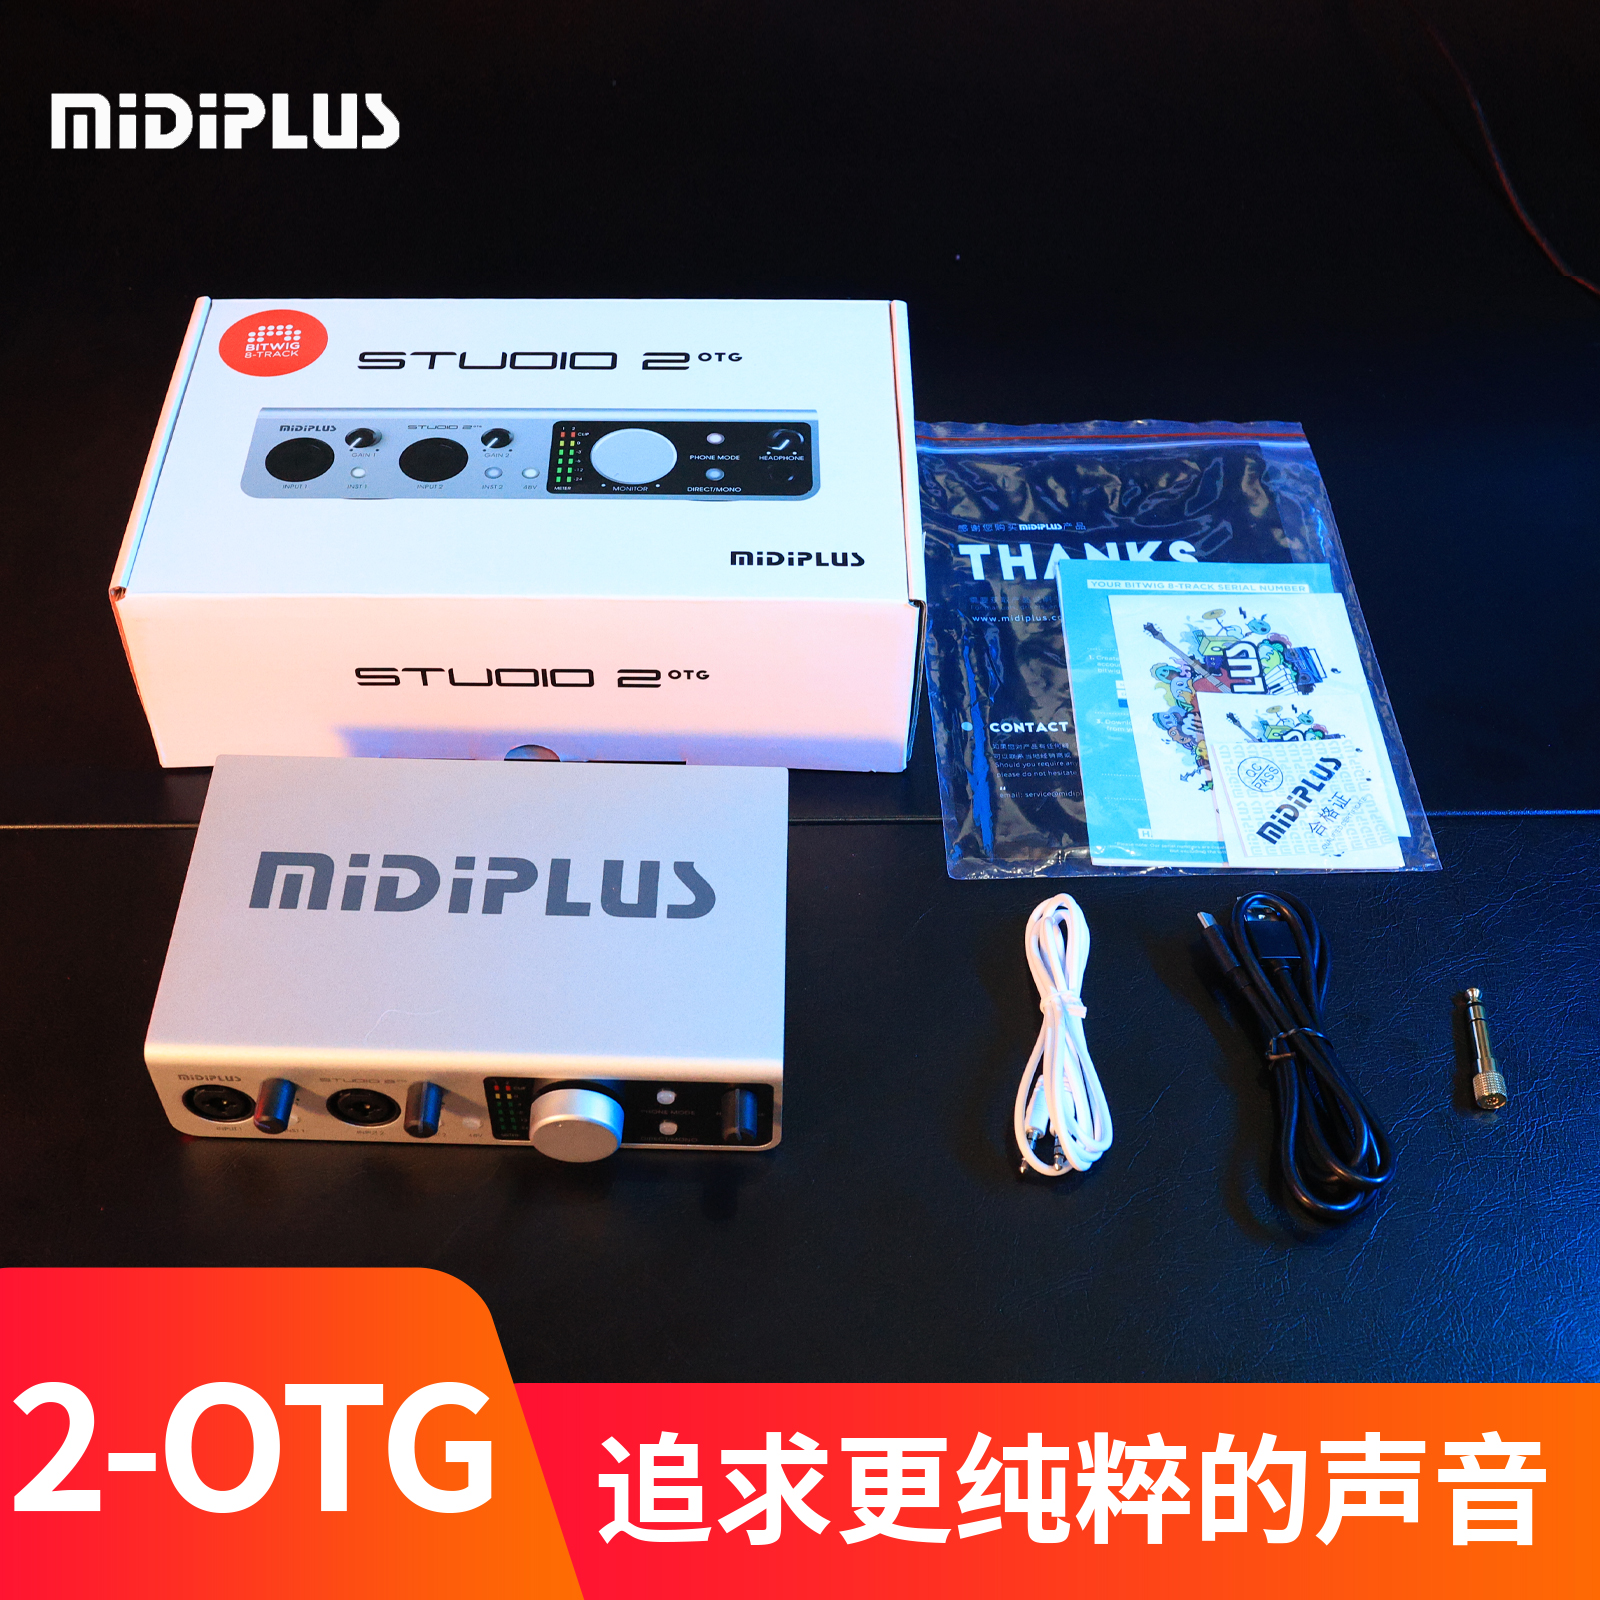 Midiplus studio 2 otg专业录音直播K歌声卡手机电脑主播外置声卡 - 图3